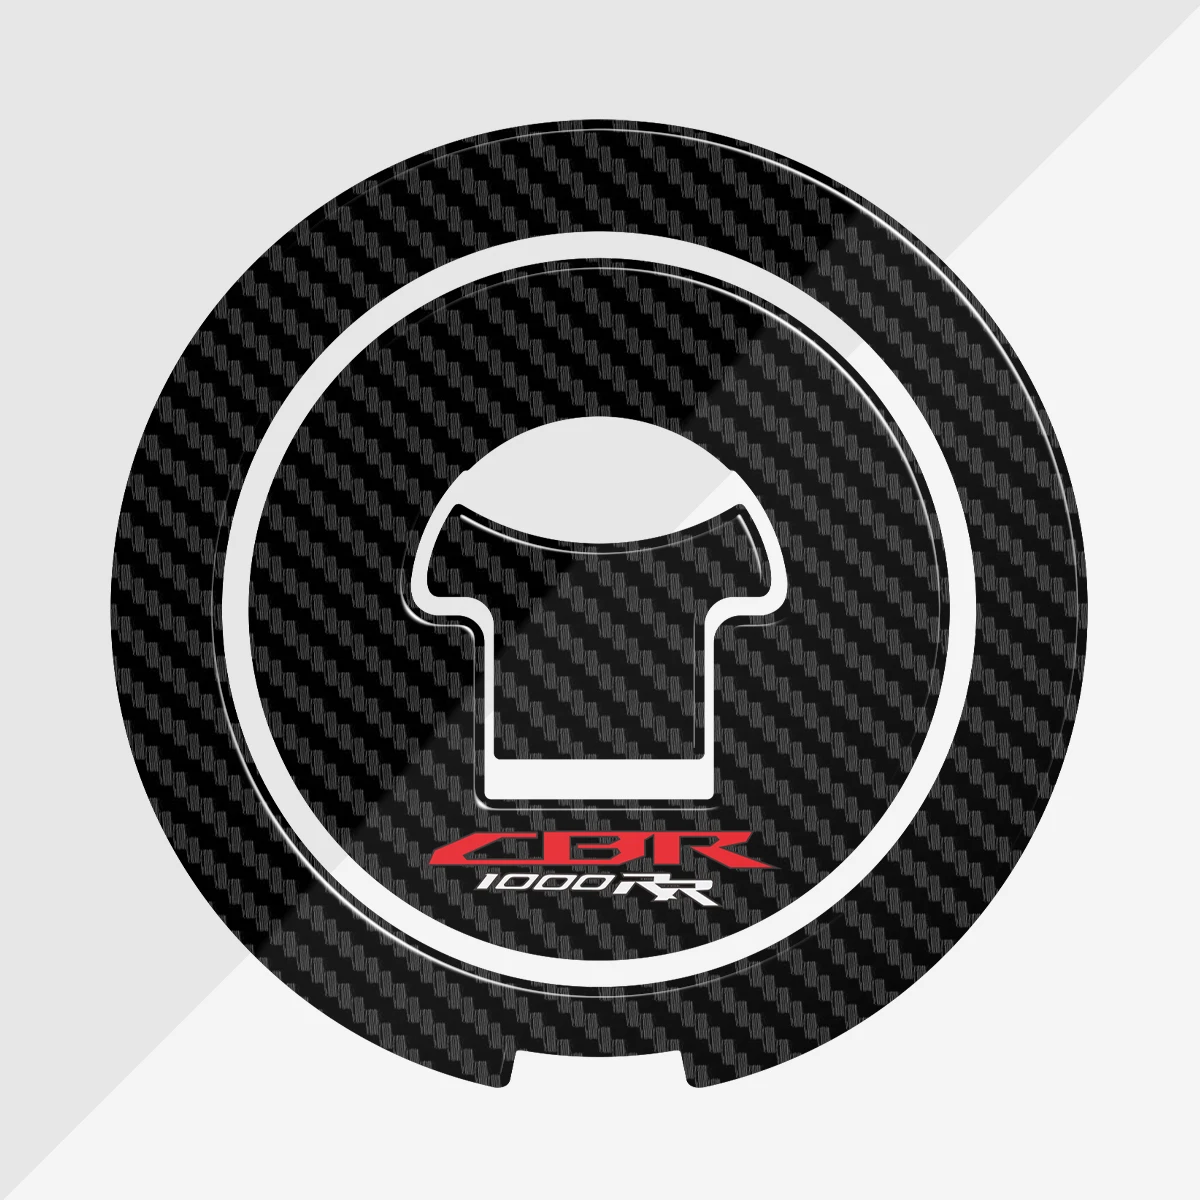 3D Carbon Fiber Tank Pad Gas Cap Decal Protector Cover For Honda CBR1000RR CBR 1000RR 2004-2013 2012 2011 2010 2009 2008 2007 каркасные автошторки honda accord 8 2008 2013 передние клипсы leg3963